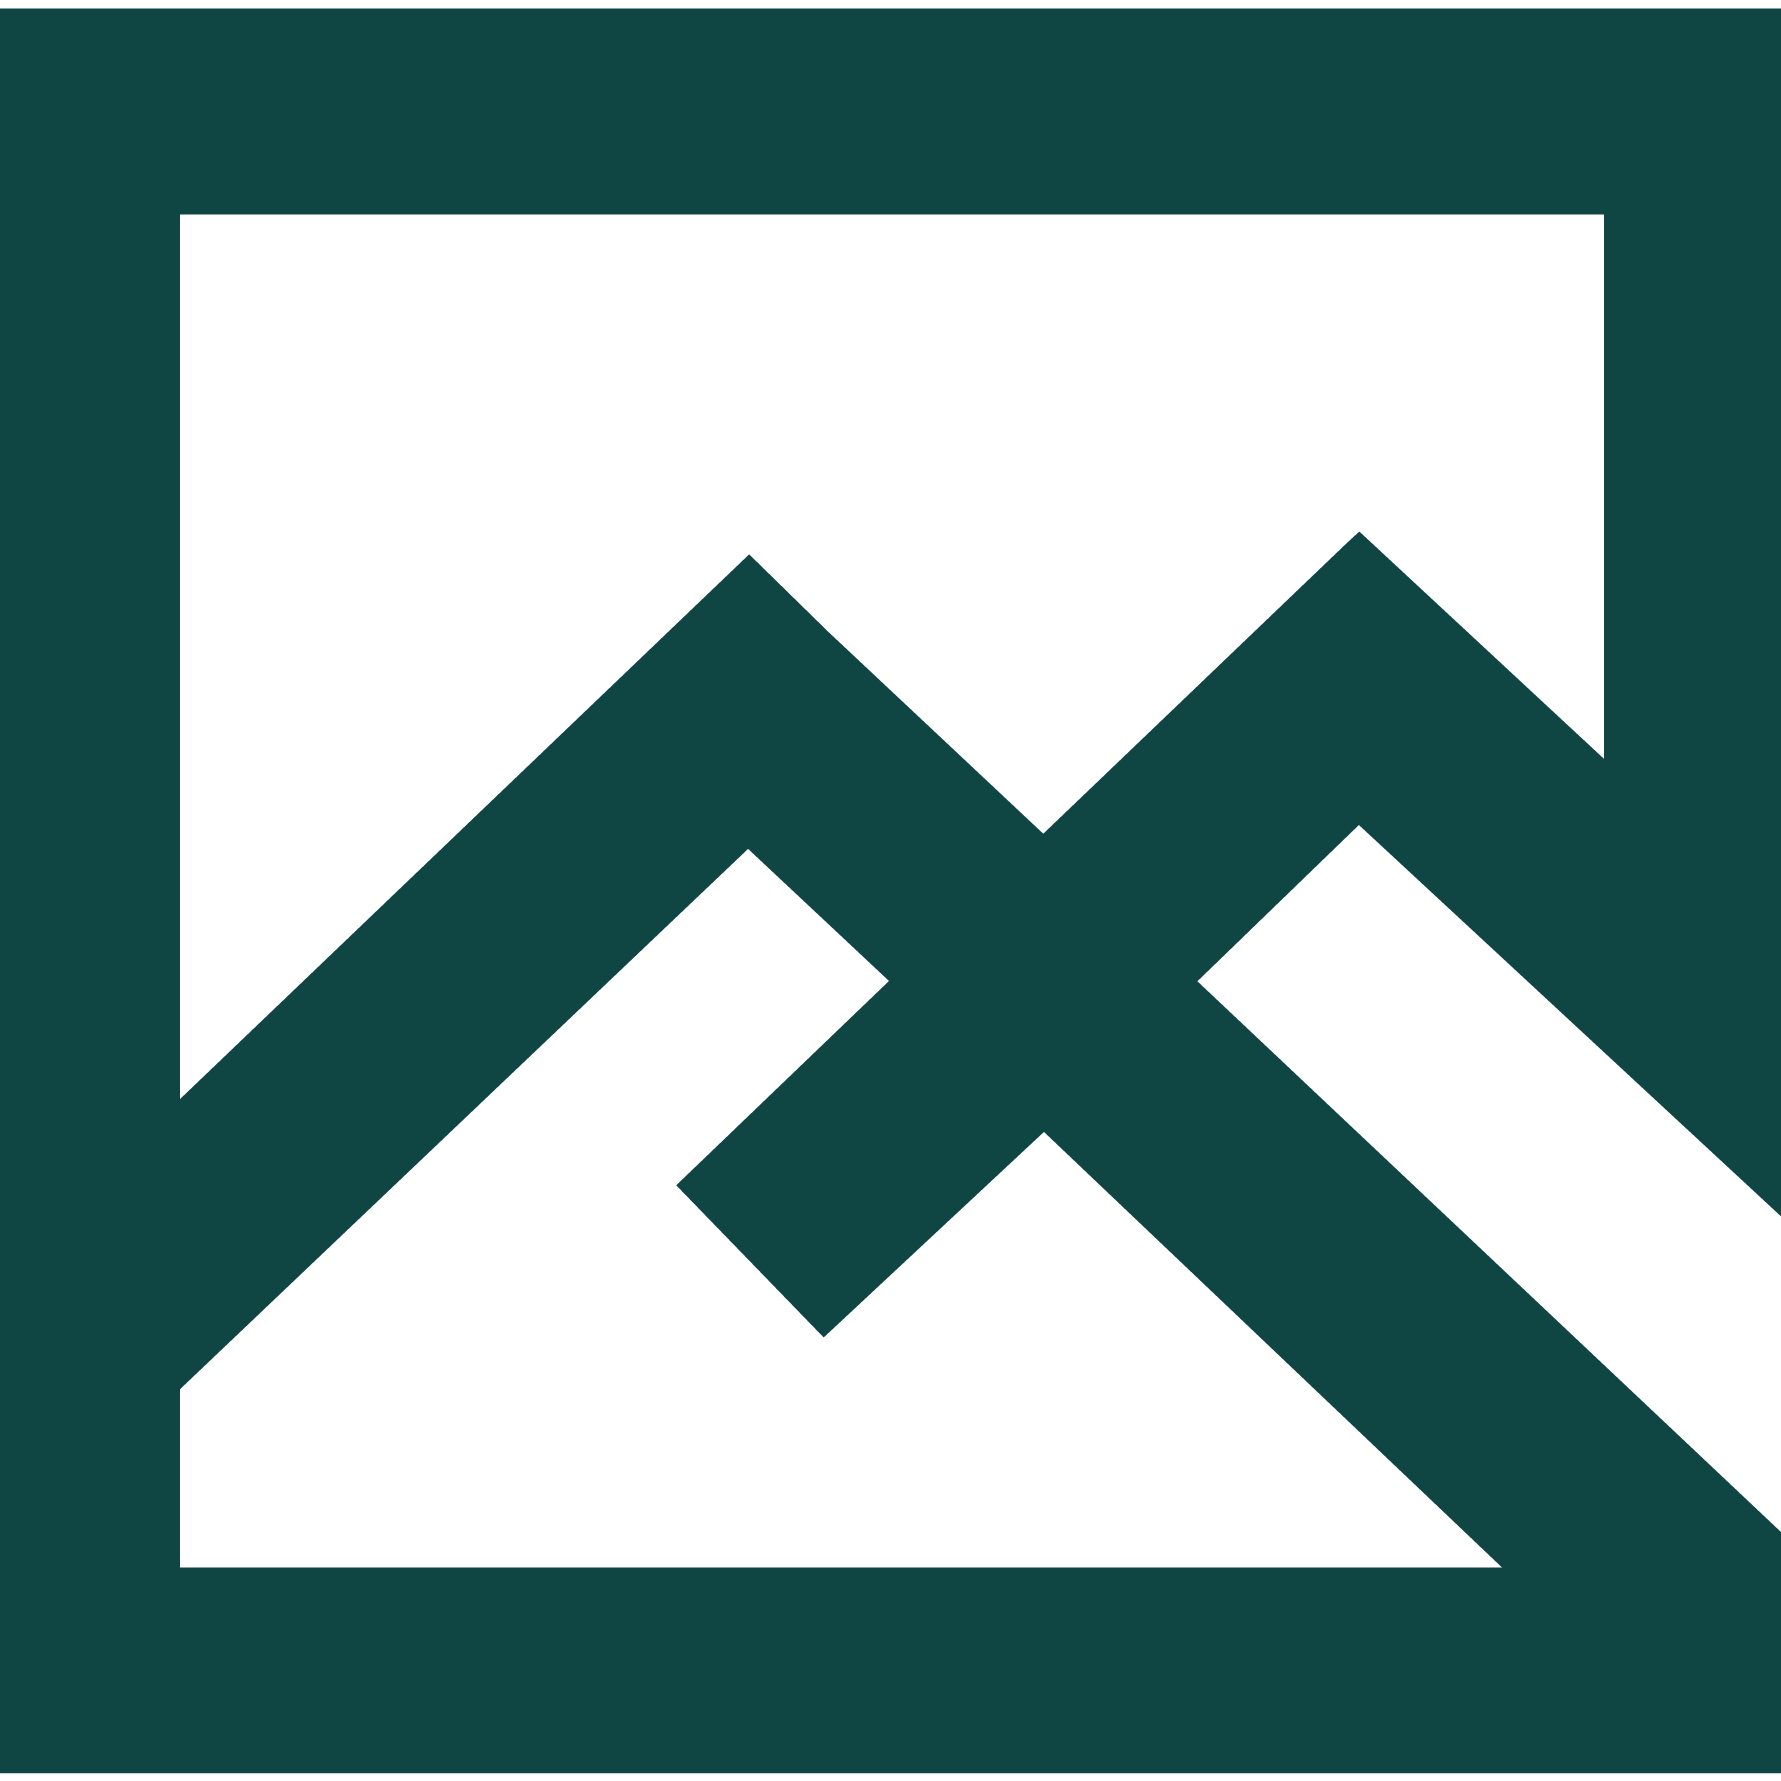 Design Everest Logo